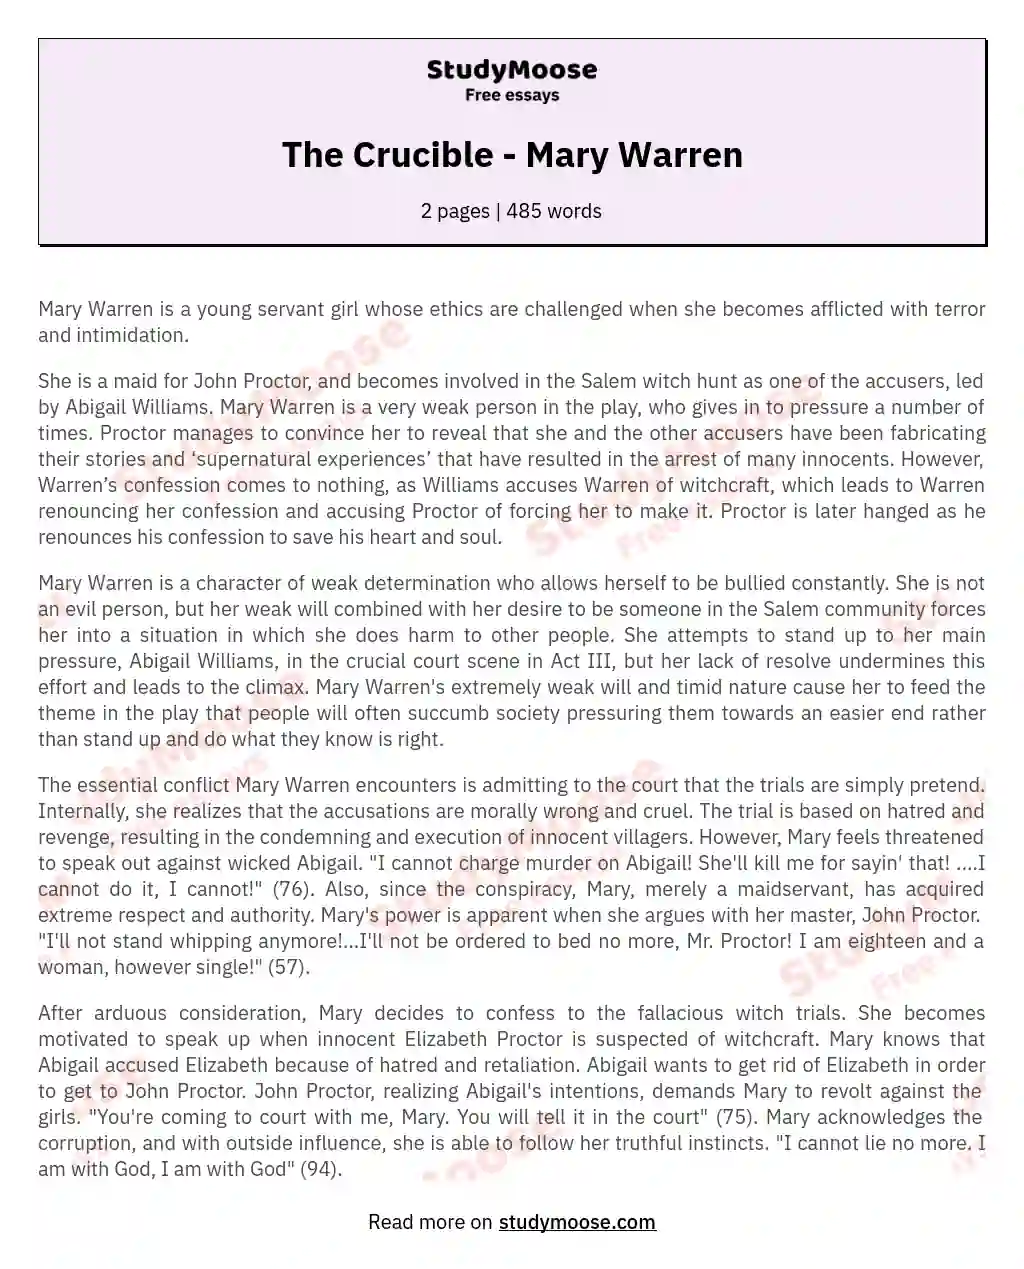 The Crucible - Mary Warren essay